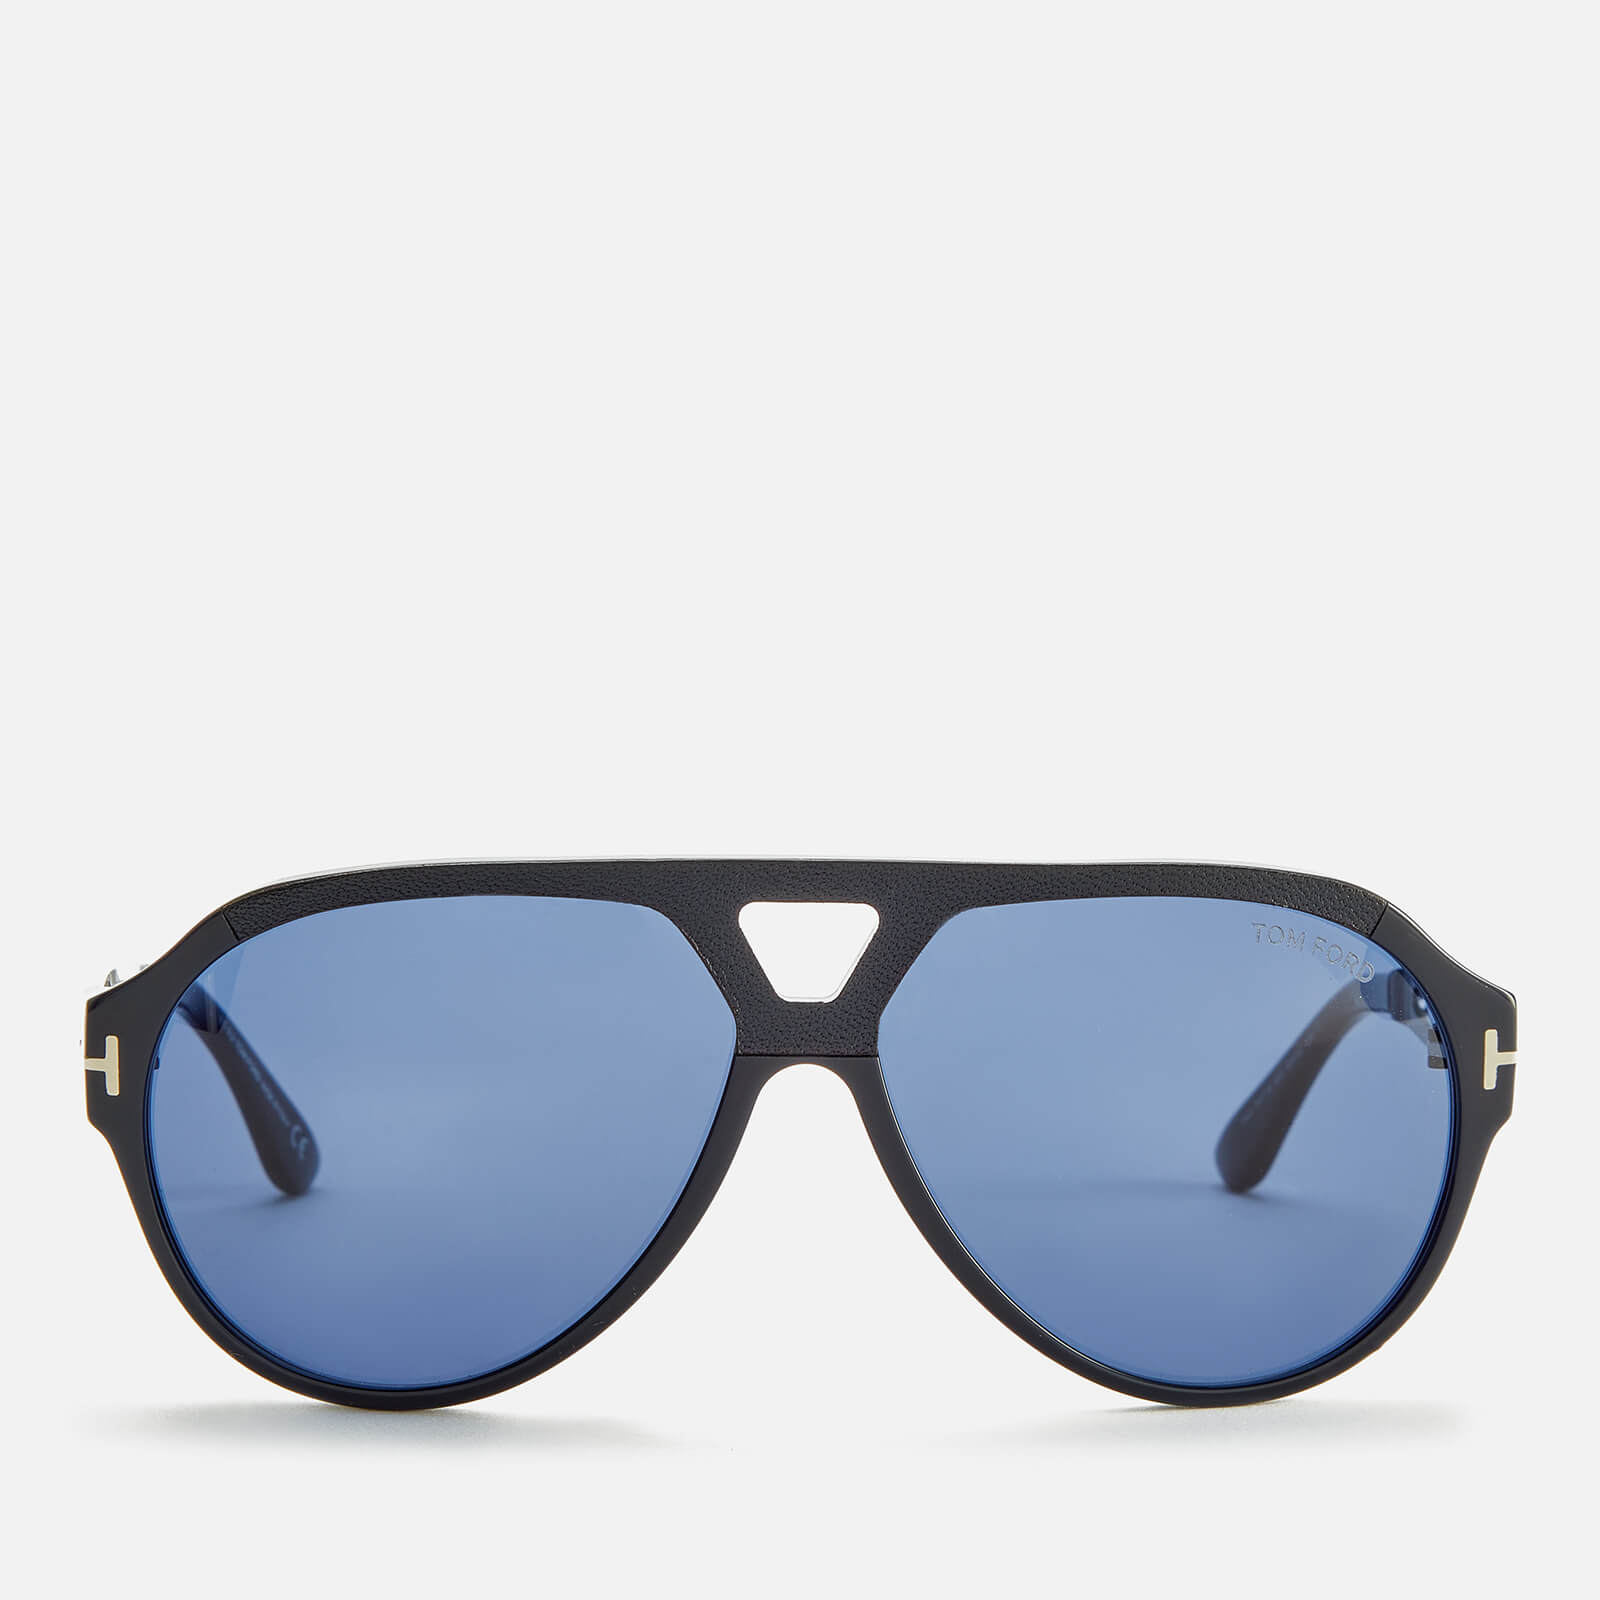 Tom Ford Men's Paul Sunglasses - Shiny Blue